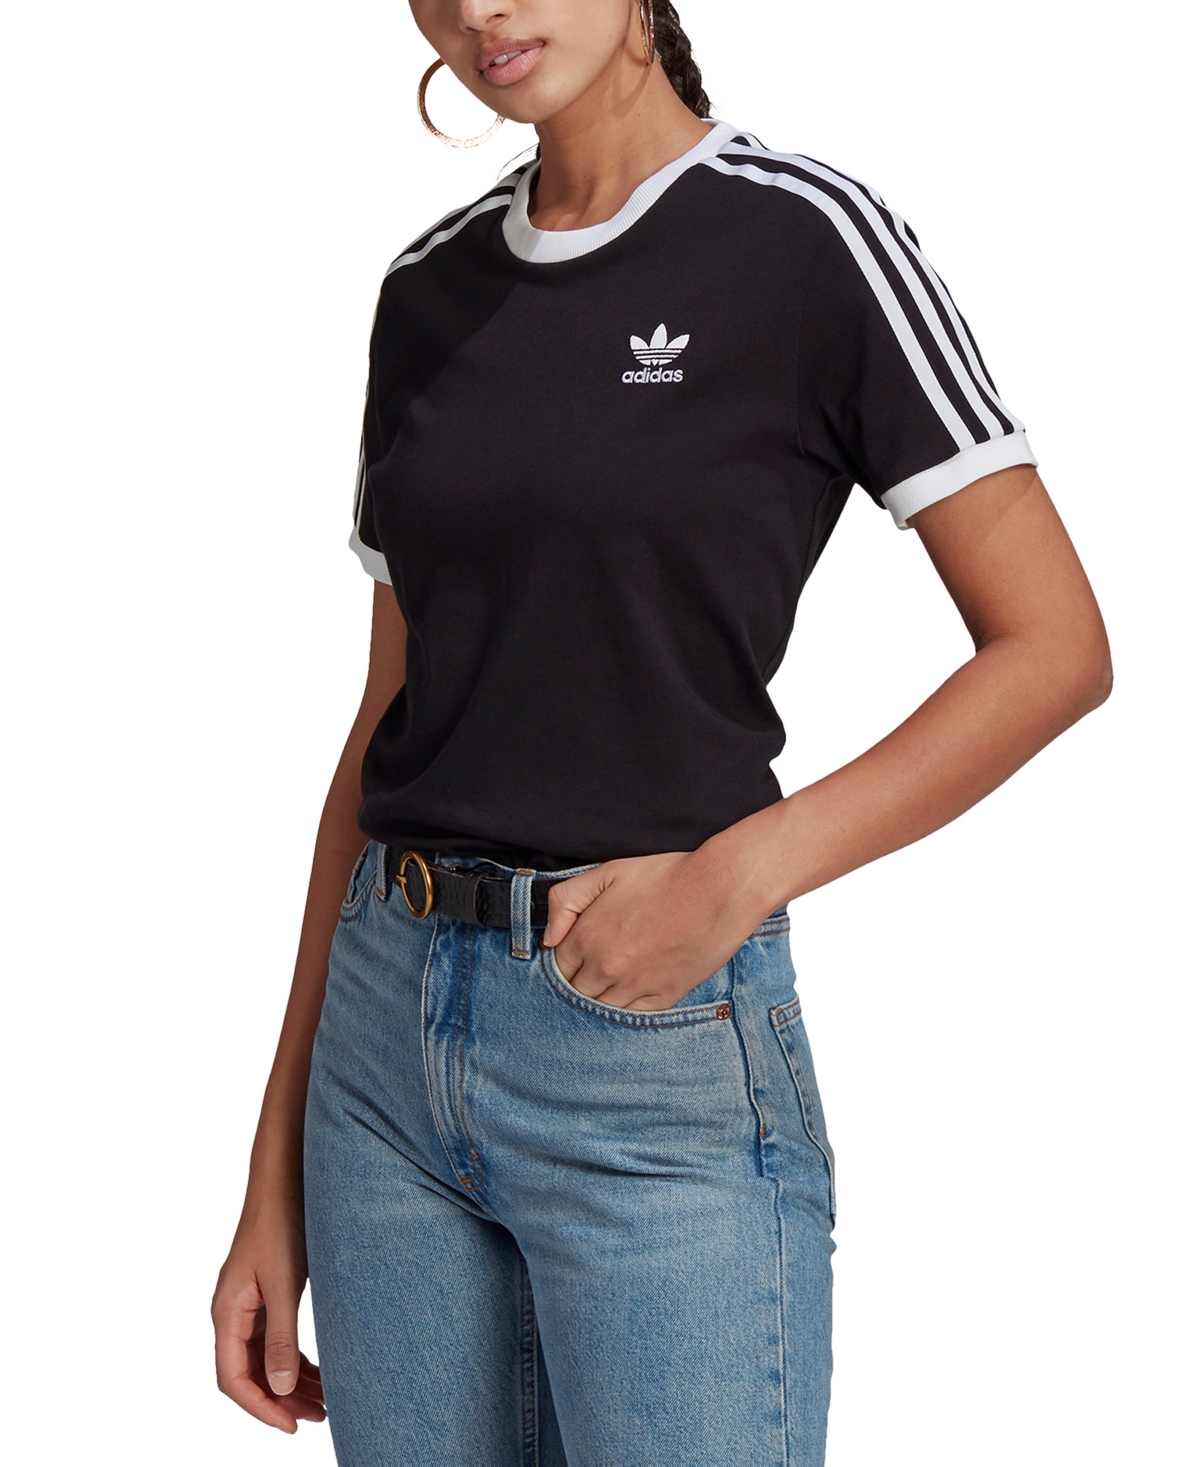 adidas Originals Women's Cotton 3 Stripes T-Shirt, Xs-4X